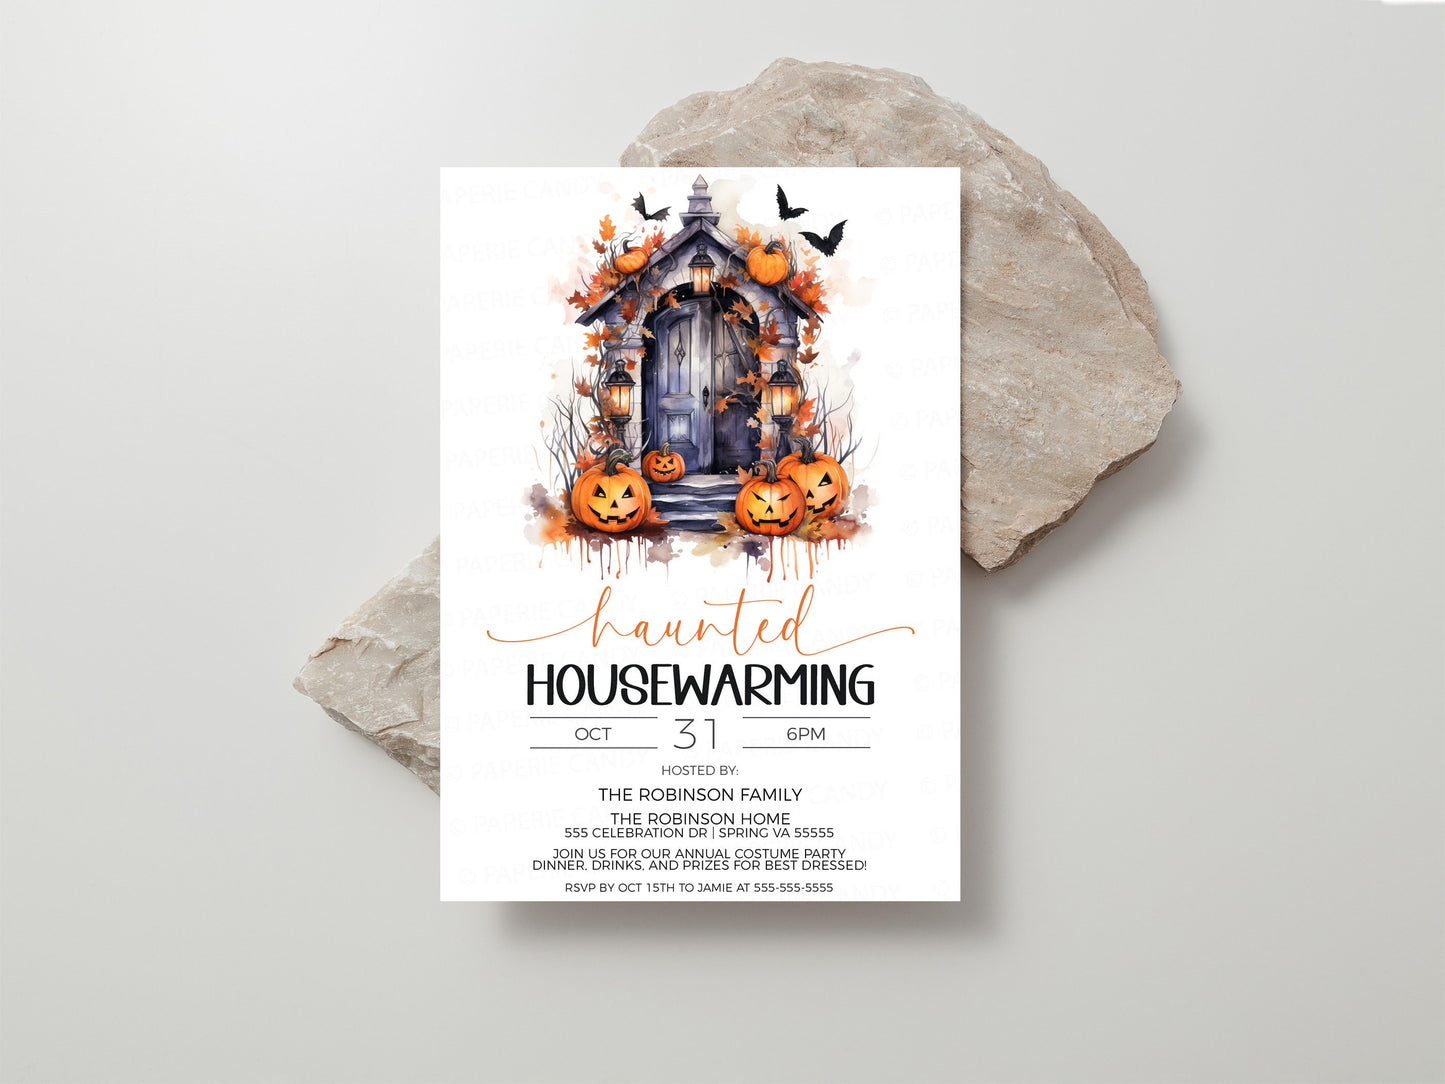 Halloween Haunted Housewarming Invitation, New Home Halloween Invite, Autumn Fall Costume Party, Address Change, Editable Printable Template